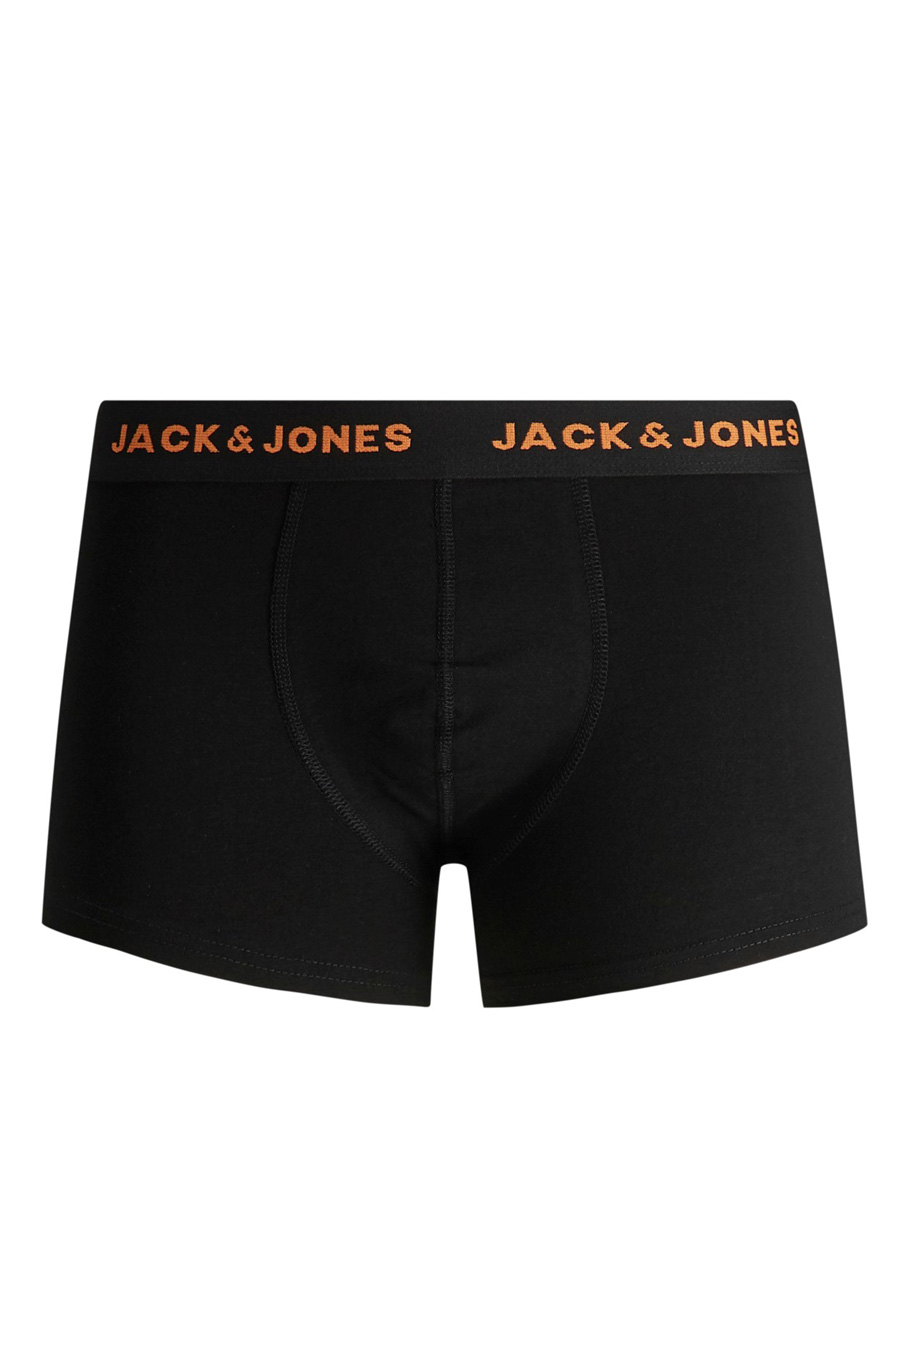 Trunks JACK & JONES 12165587-Black